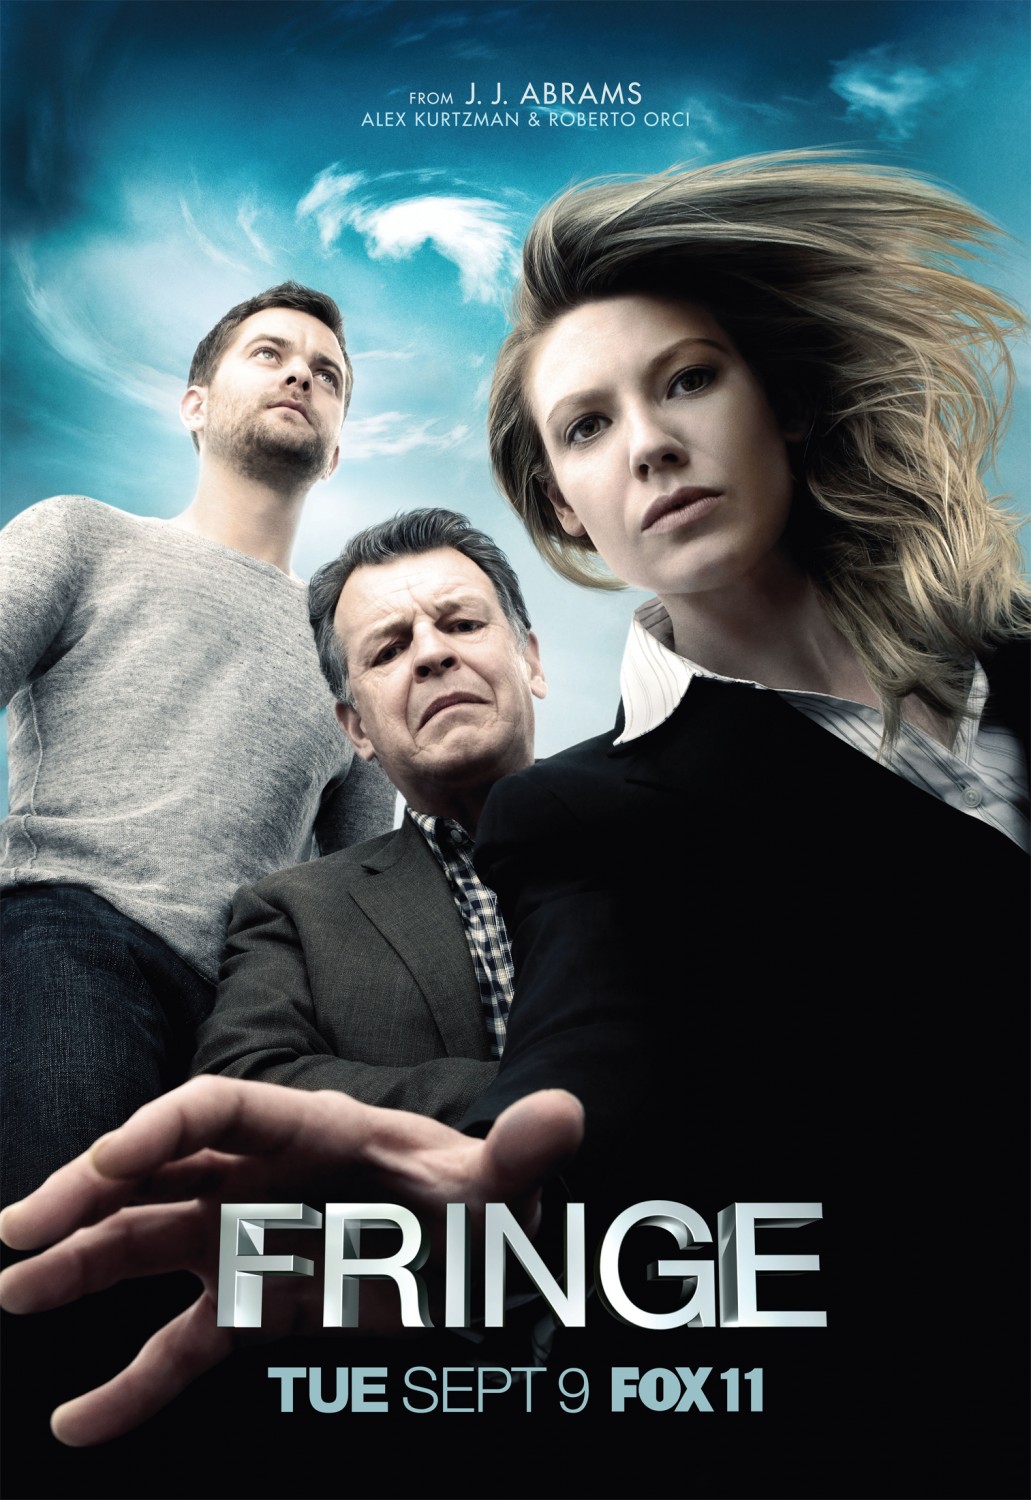 Extra Large TV Poster Image for Fringe (#10 of 33)